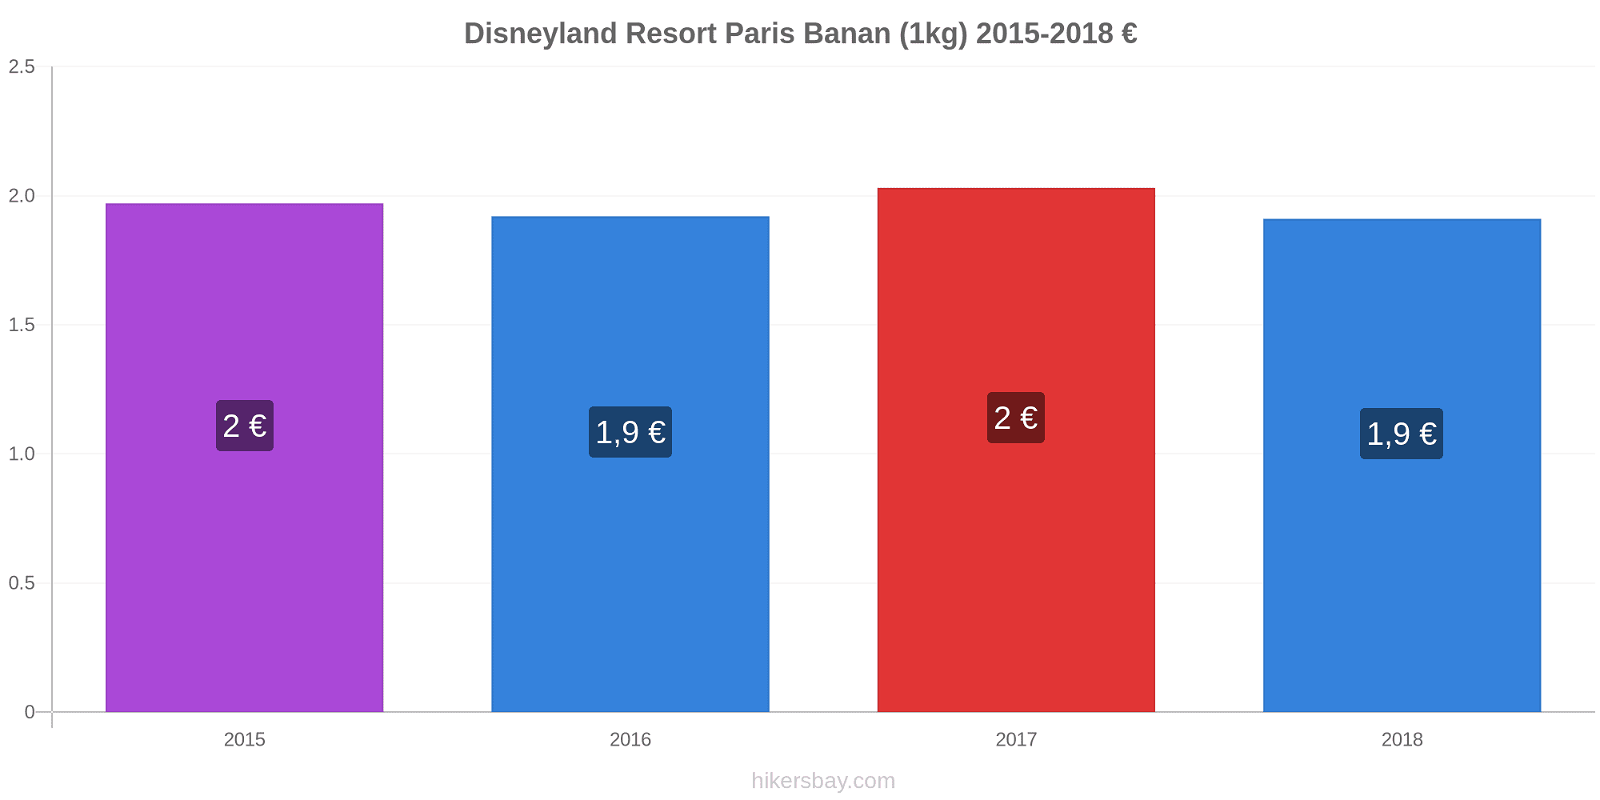 Disneyland Resort Paris prisændringer Banan (1kg) hikersbay.com